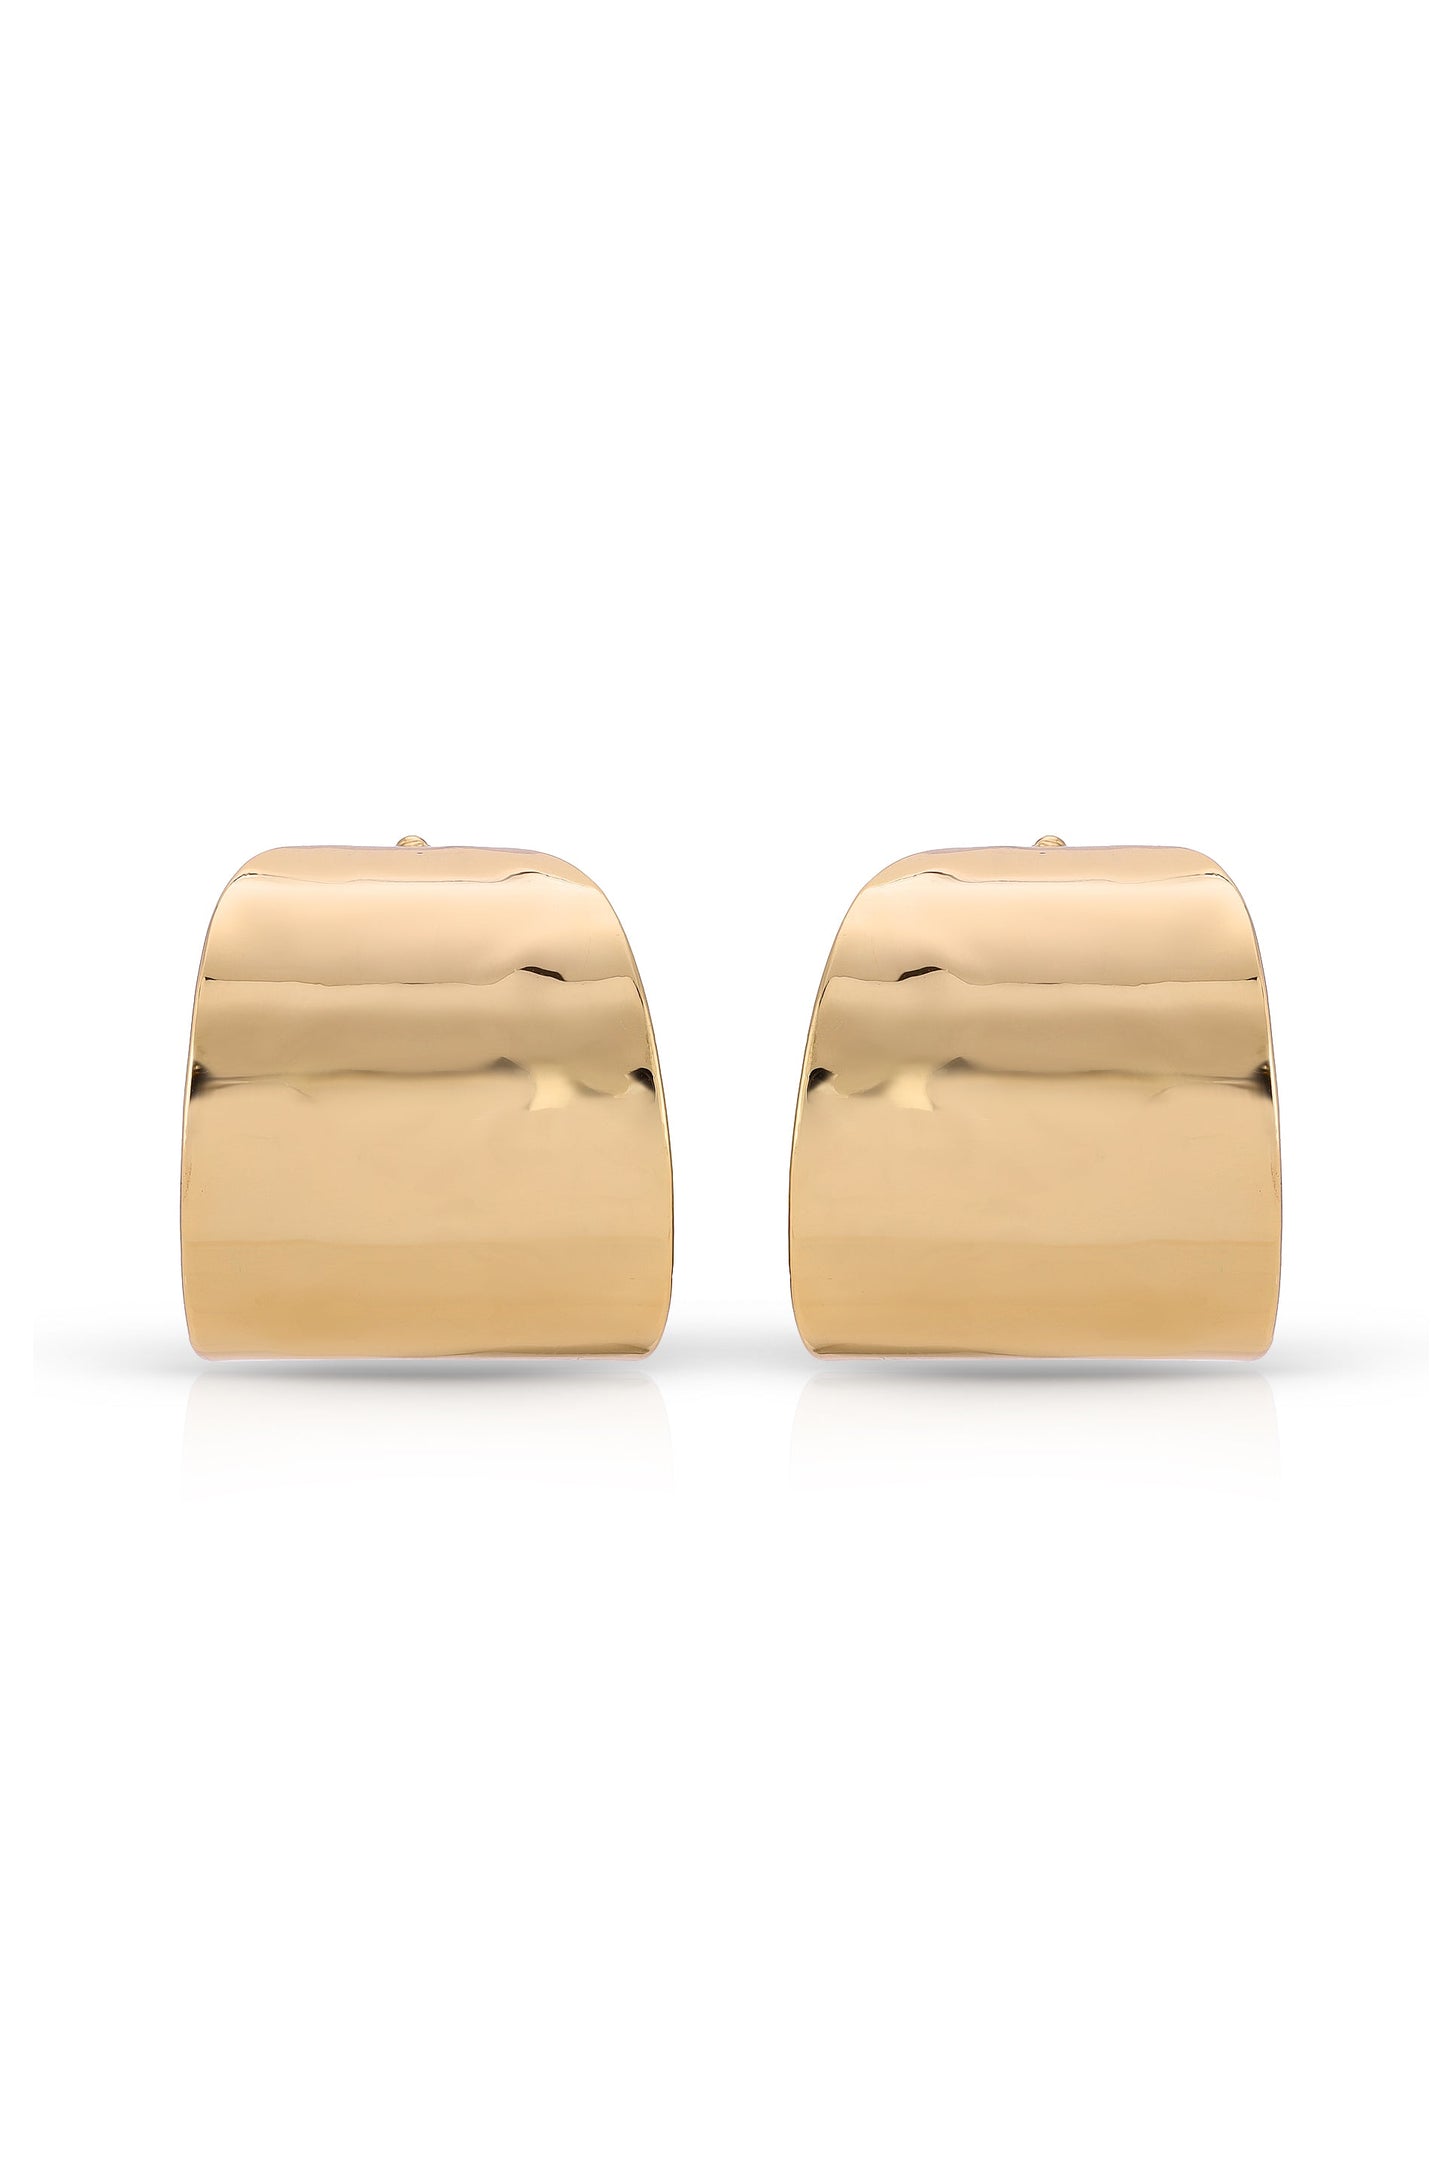 Hammered Cupped Hoop Earrings - Premium Earrings from Ettika - Just $35! Shop now at Tooksie